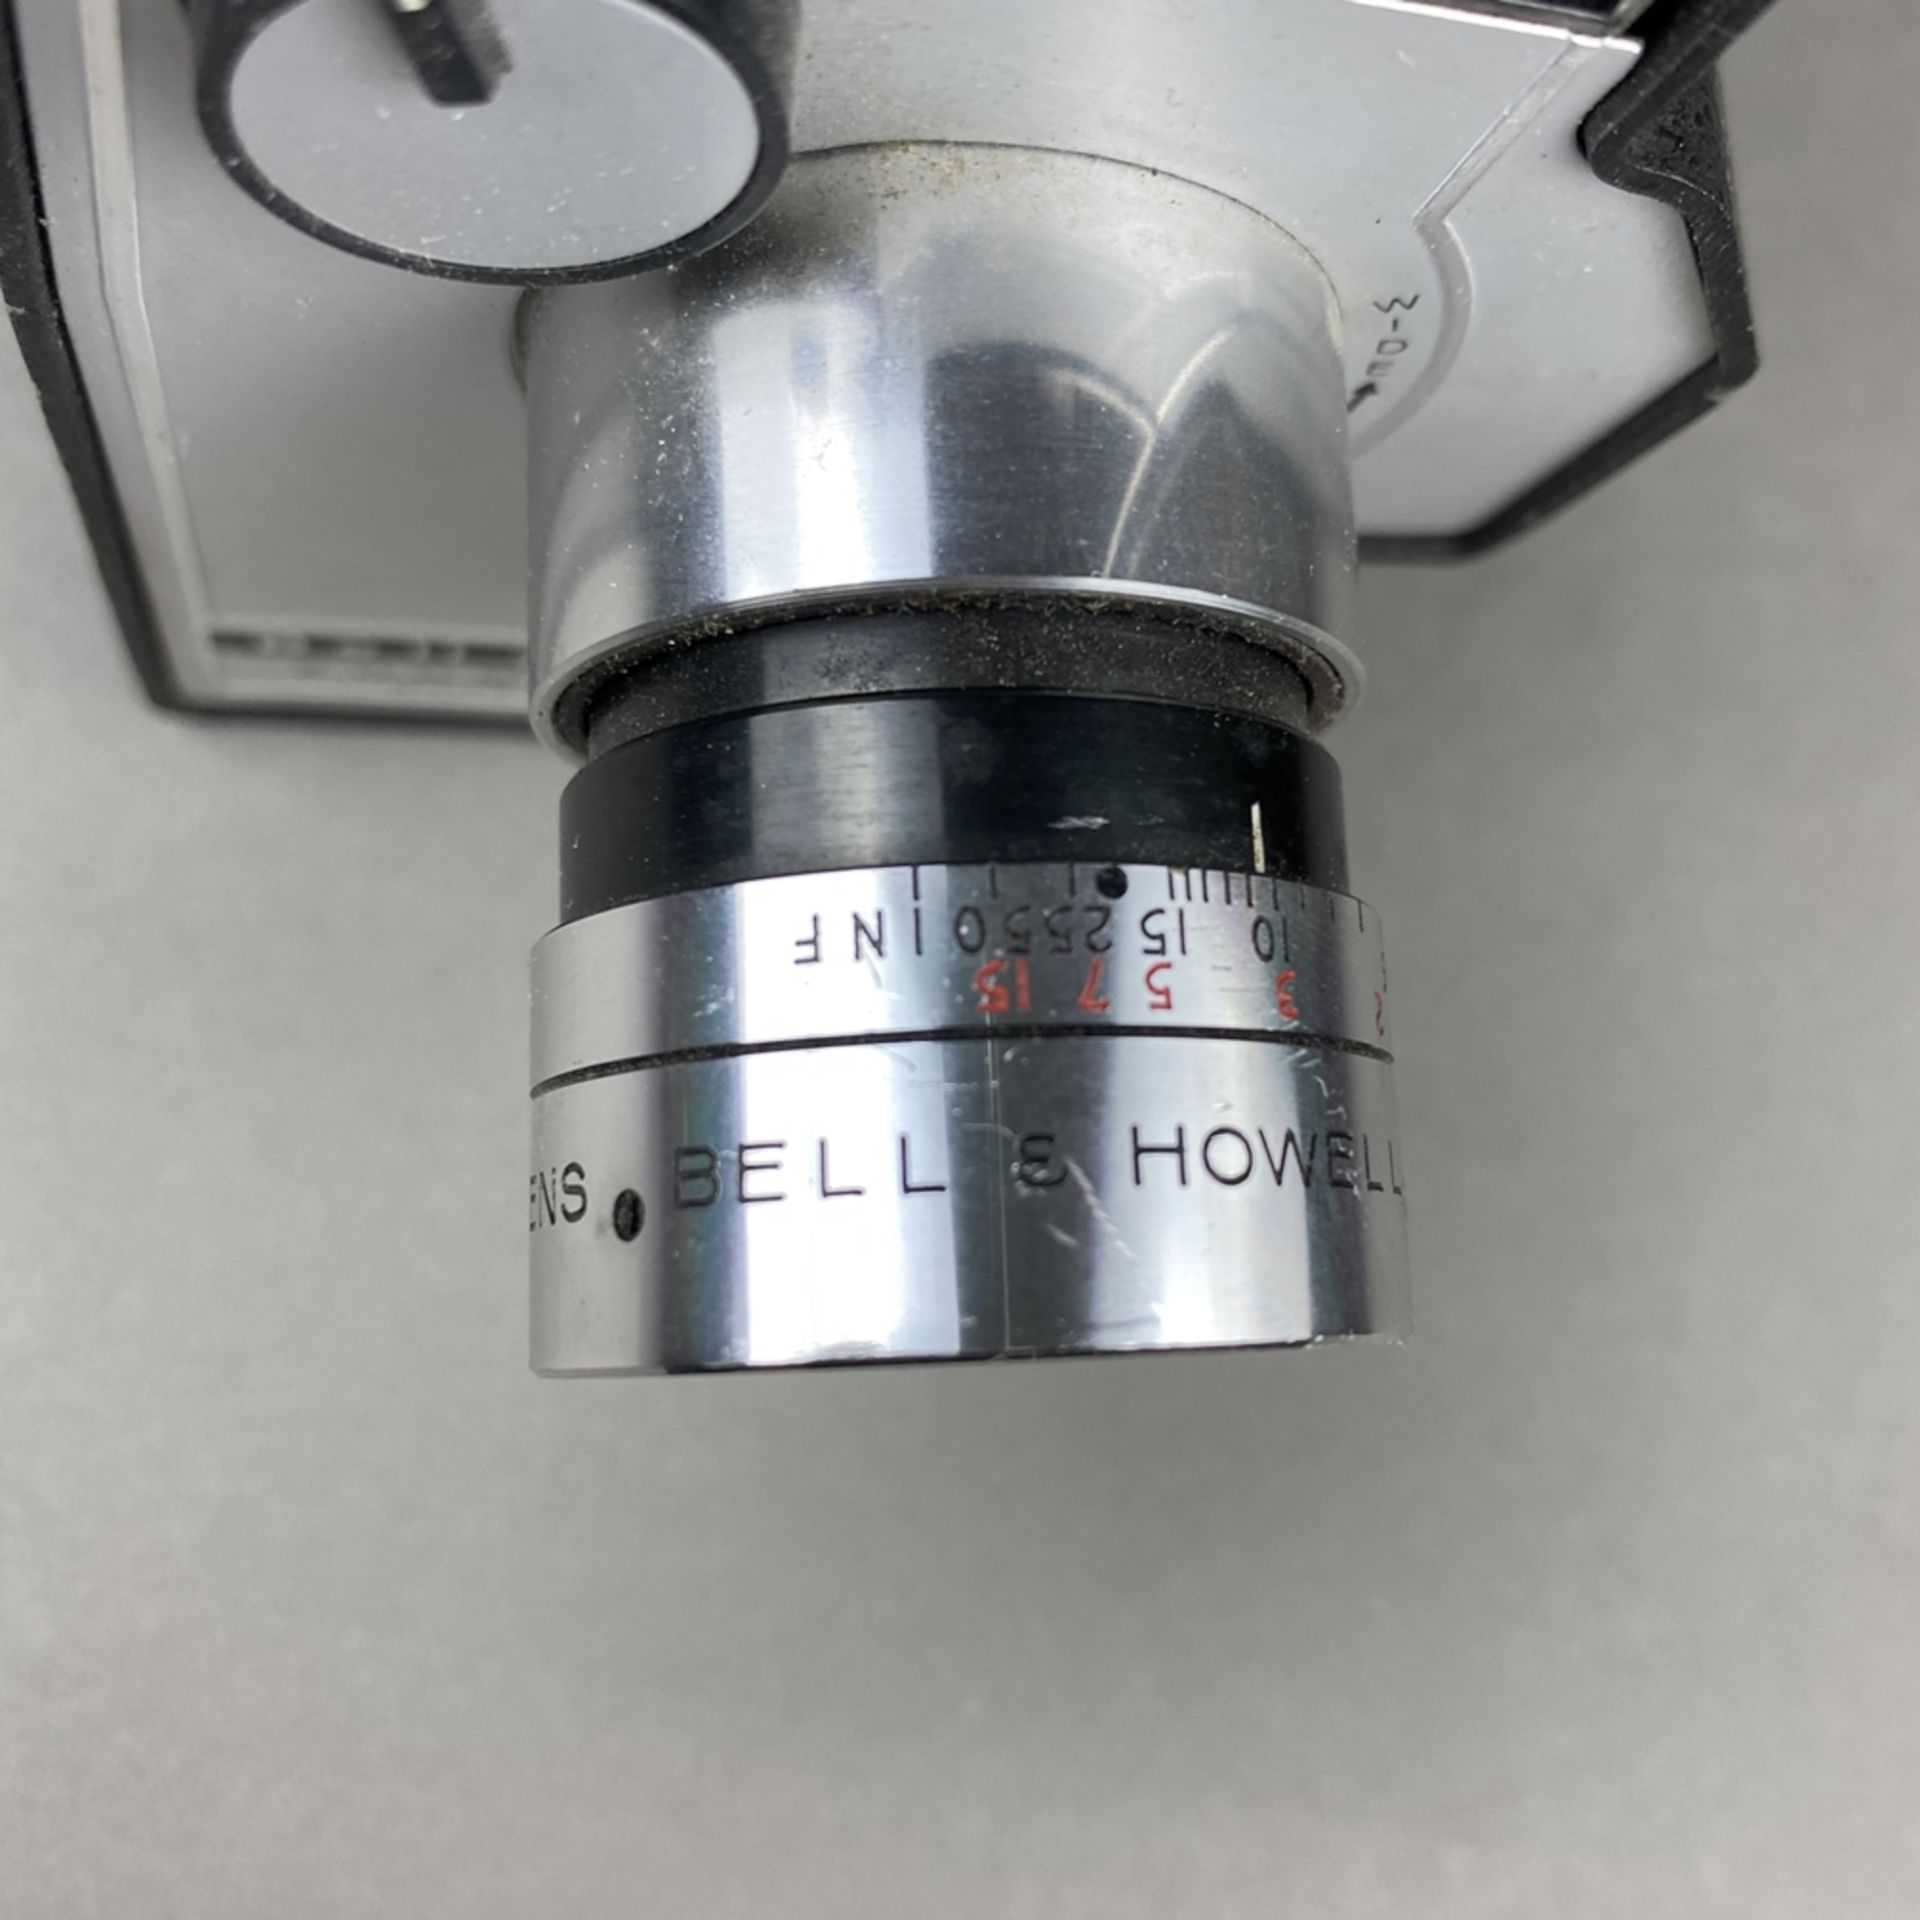 Vintage Filmkamera Bell&Howell - Japan, Zoom Reflex, Autoload, Bell & Howell 9-29mm Zoom-Objektiv, - Bild 4 aus 9